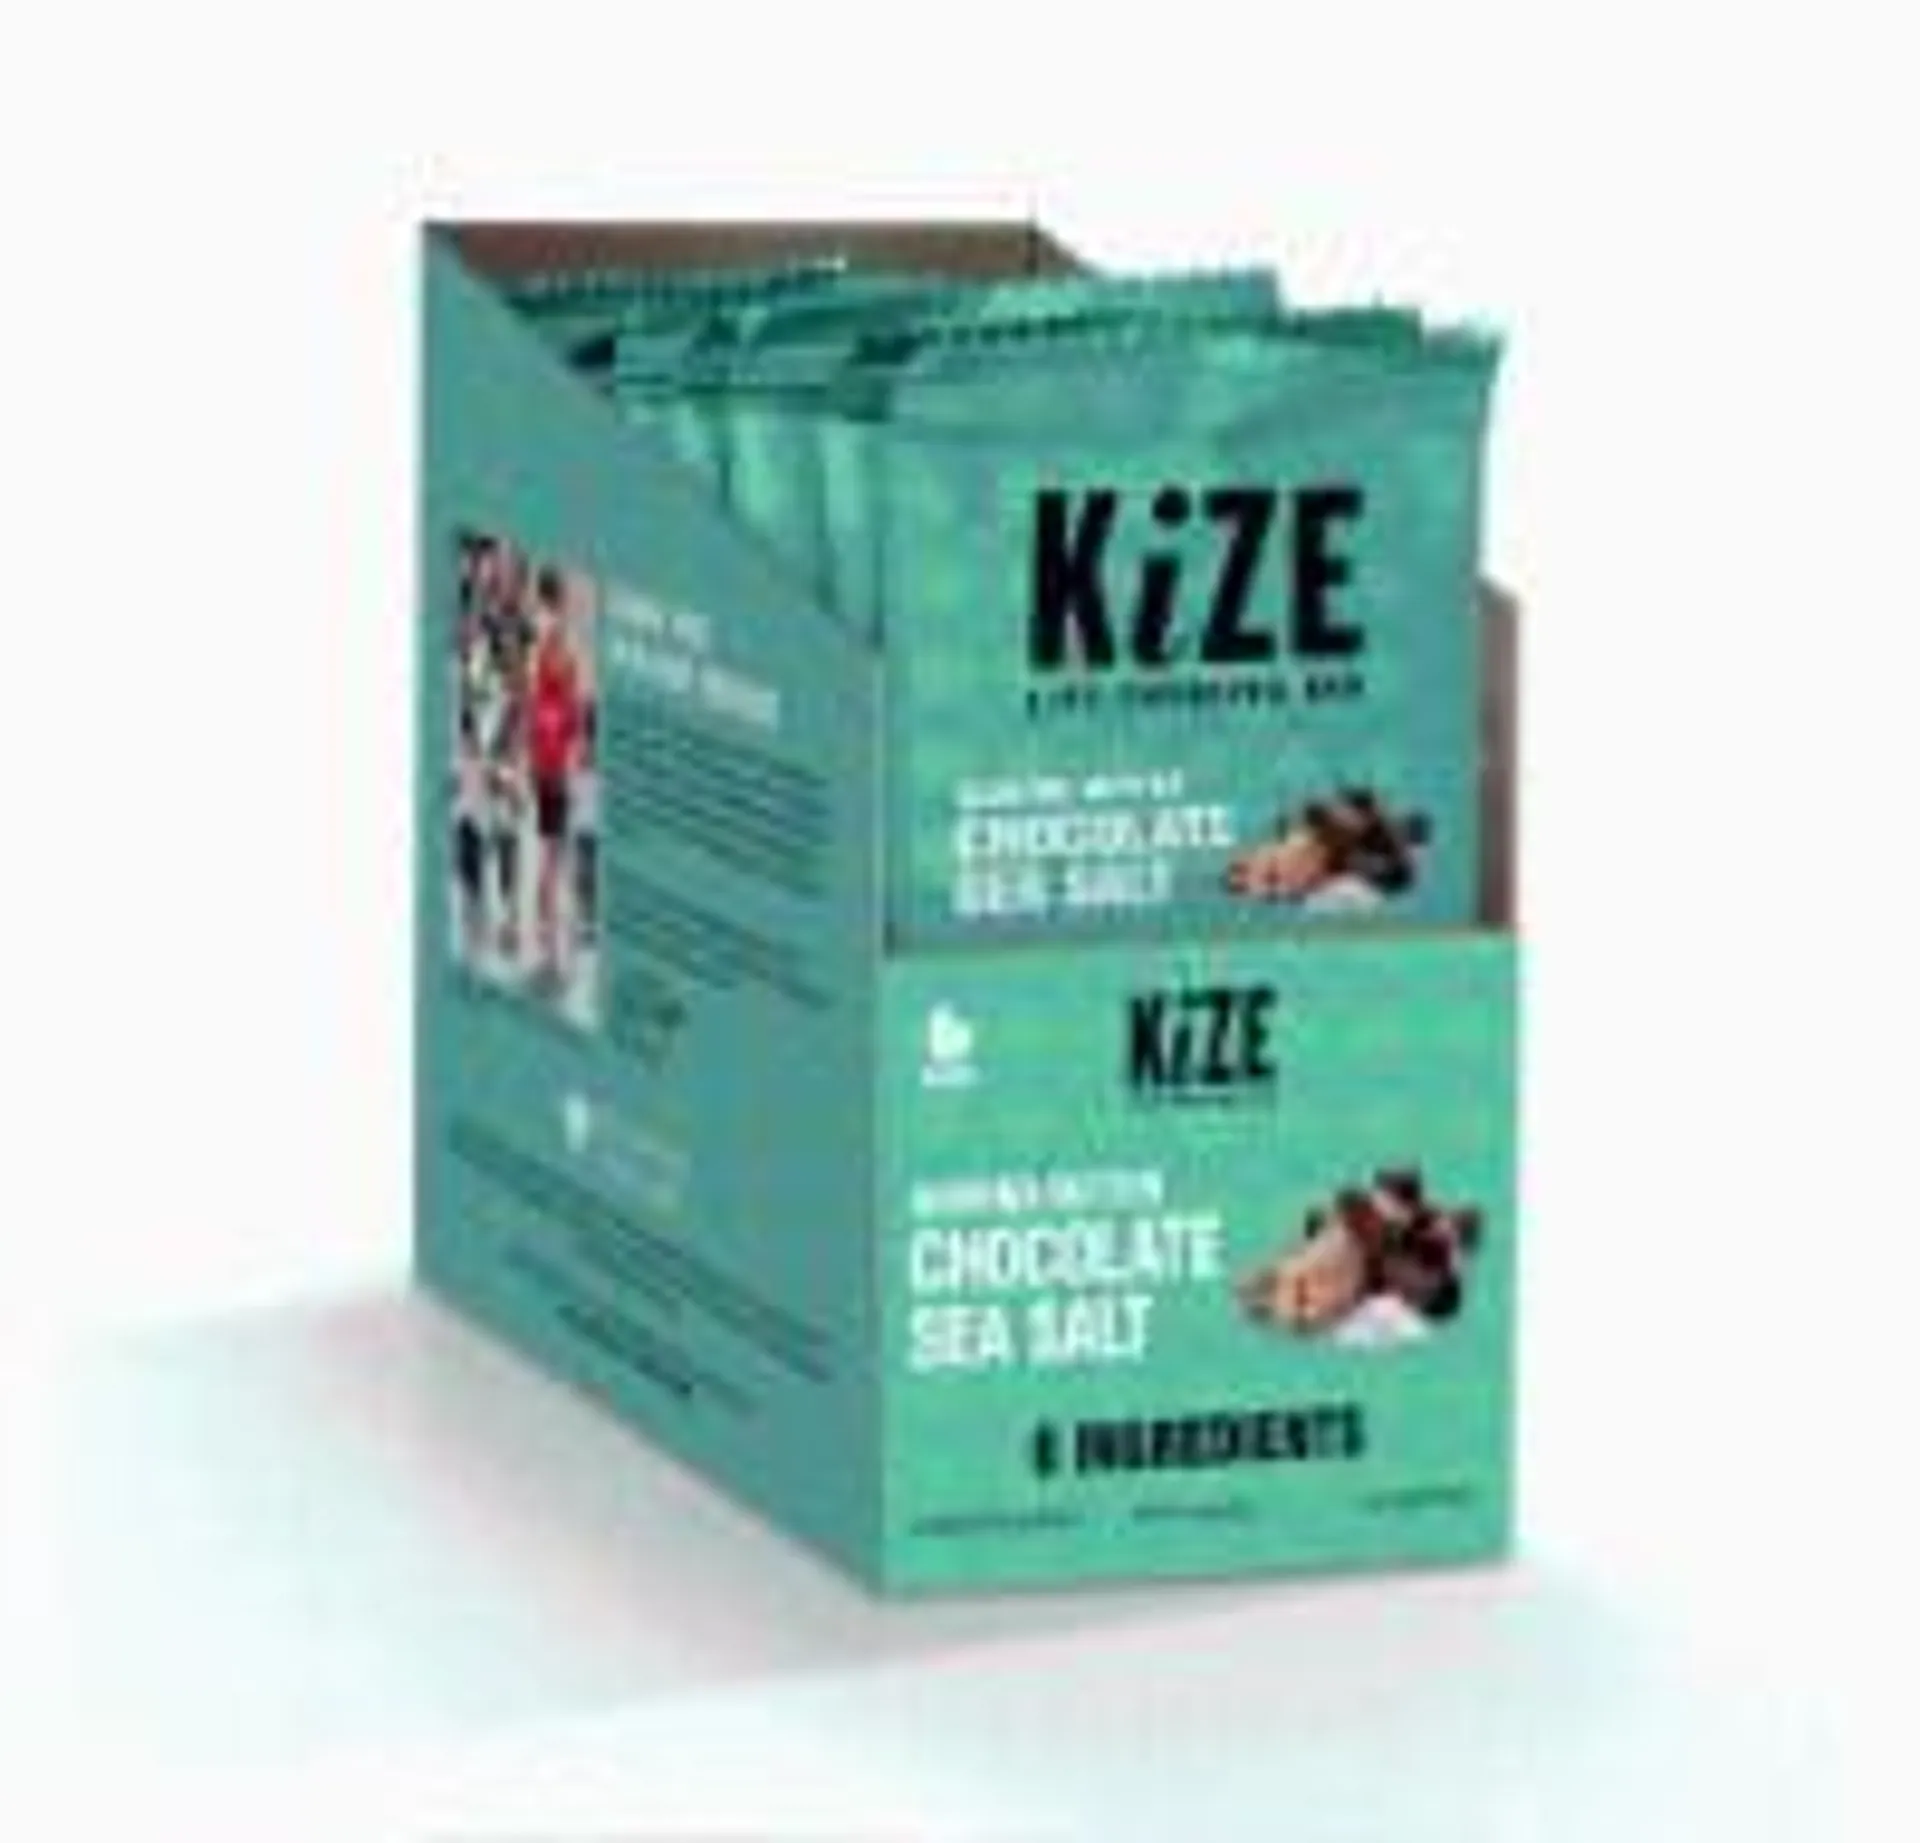 KiZE Life Changing Bar Almond Butter Chocolate Sea Salt